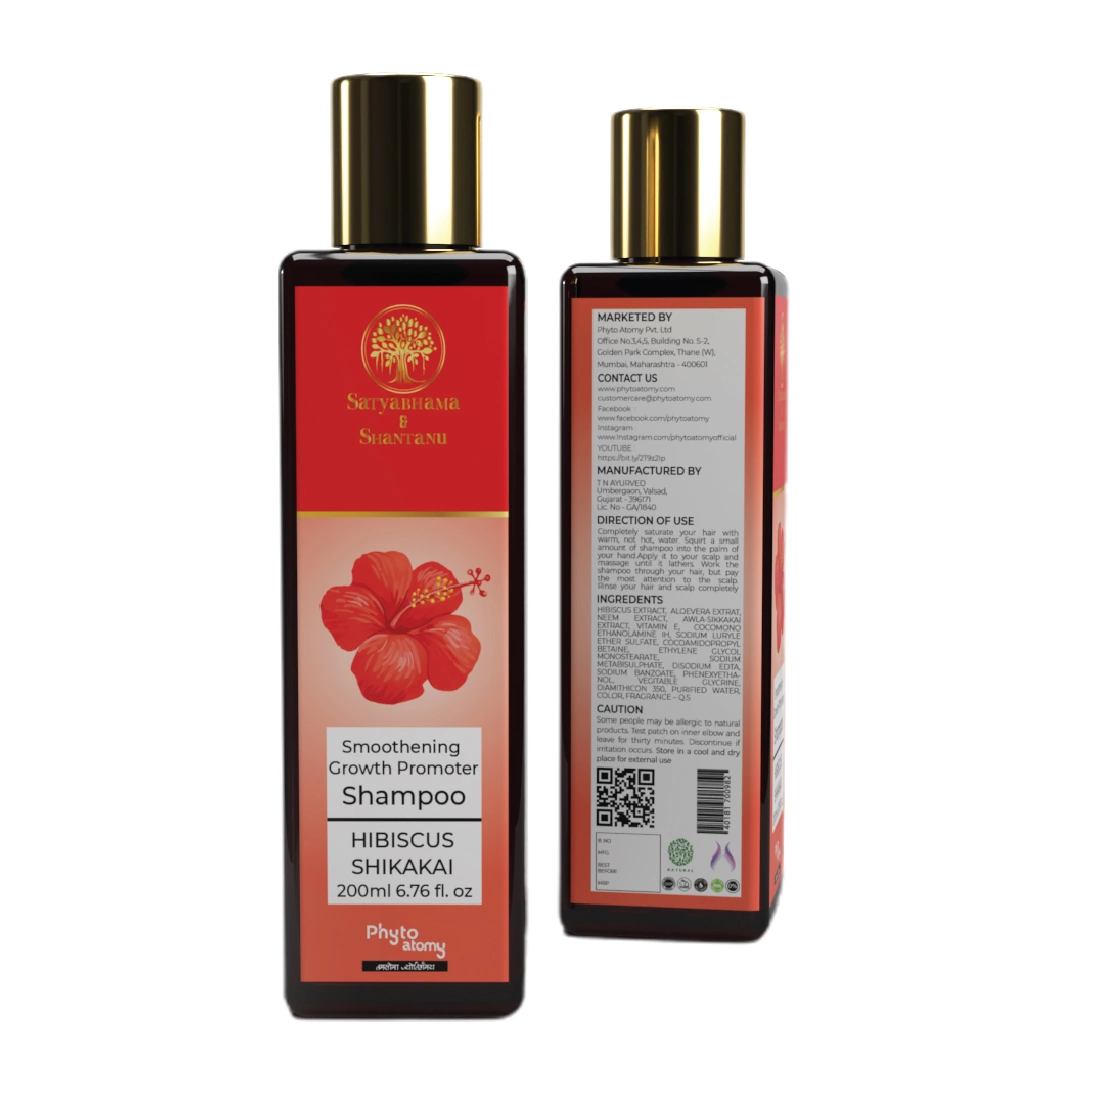 Hibiscus Shikakai Shampoo (200 ml)